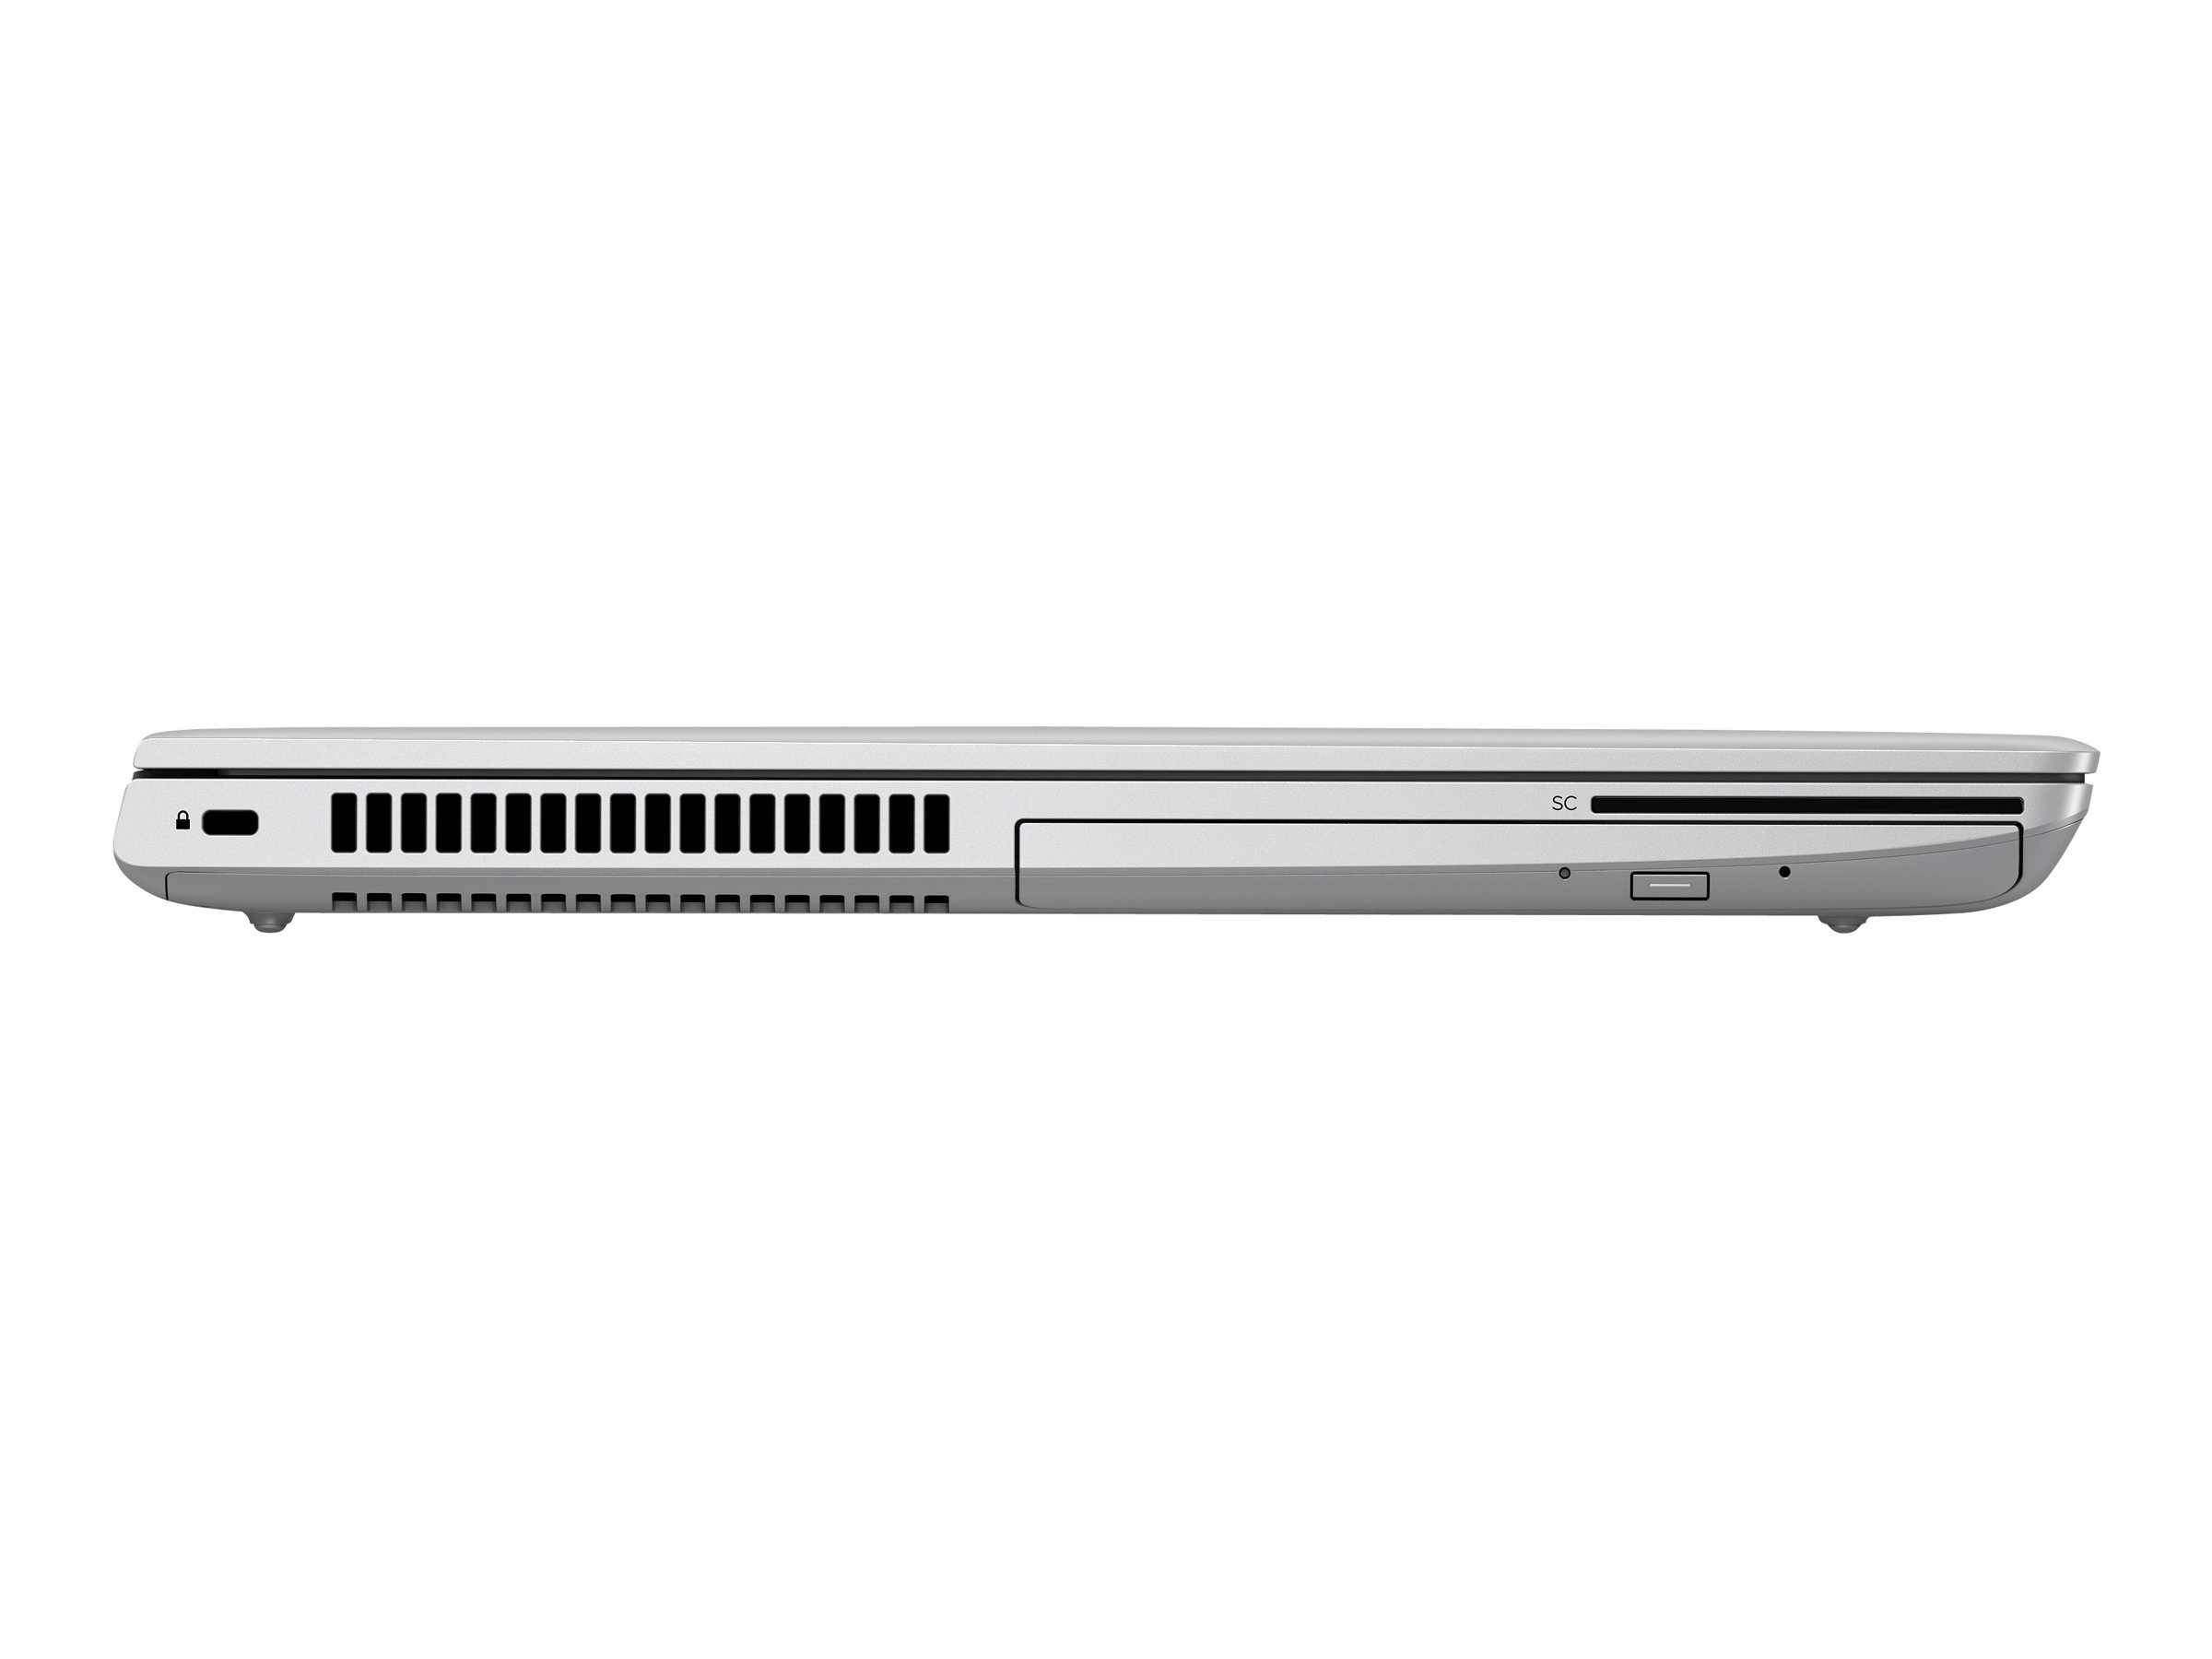 HP ProBook 650 G4 - Core i7 8850H / 2.6 GHz